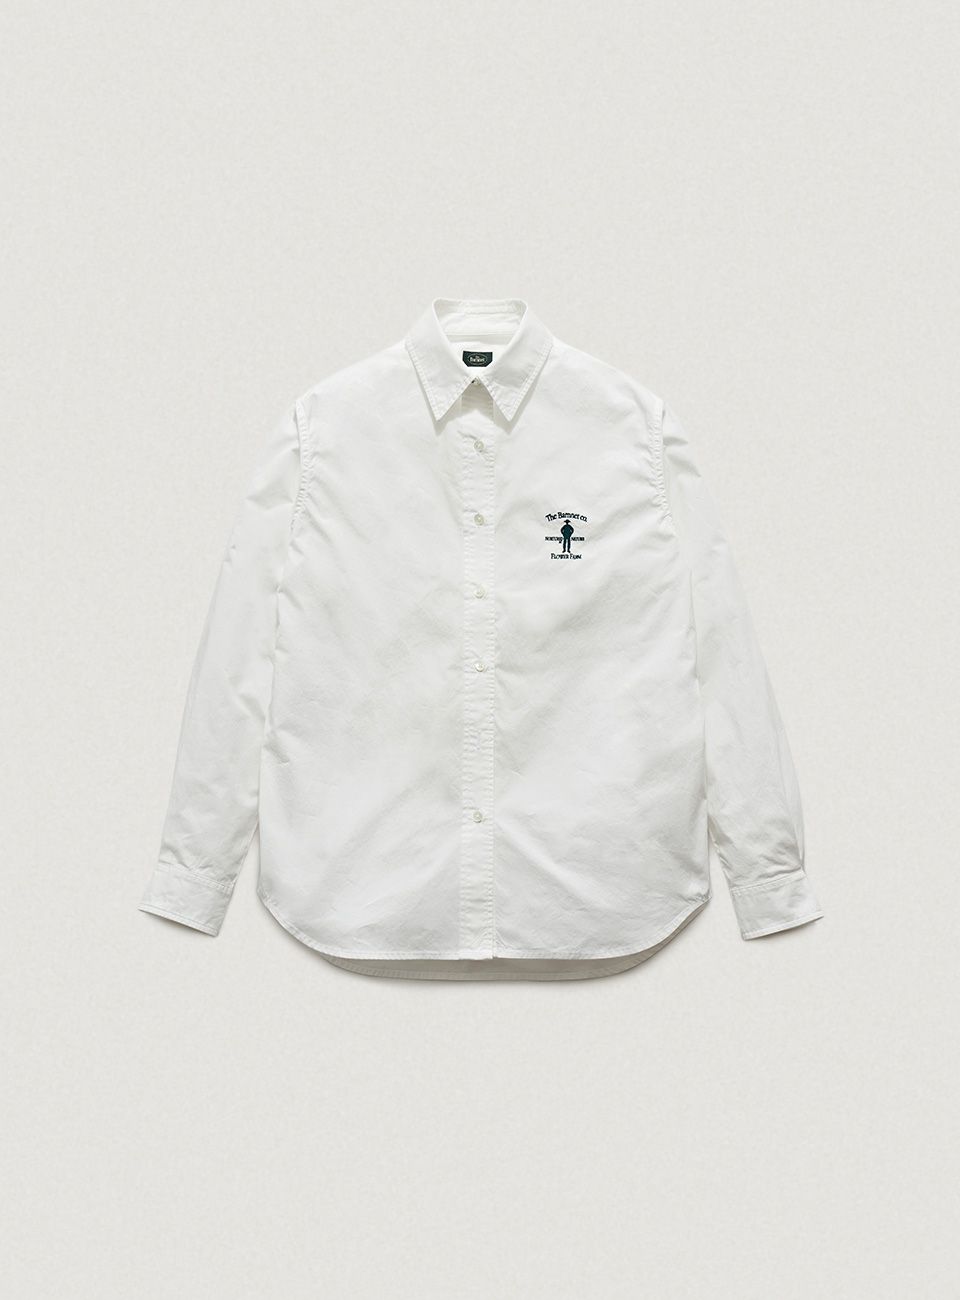 White Flower Farm Uniform Shirt[6월 중순 순차 배송]